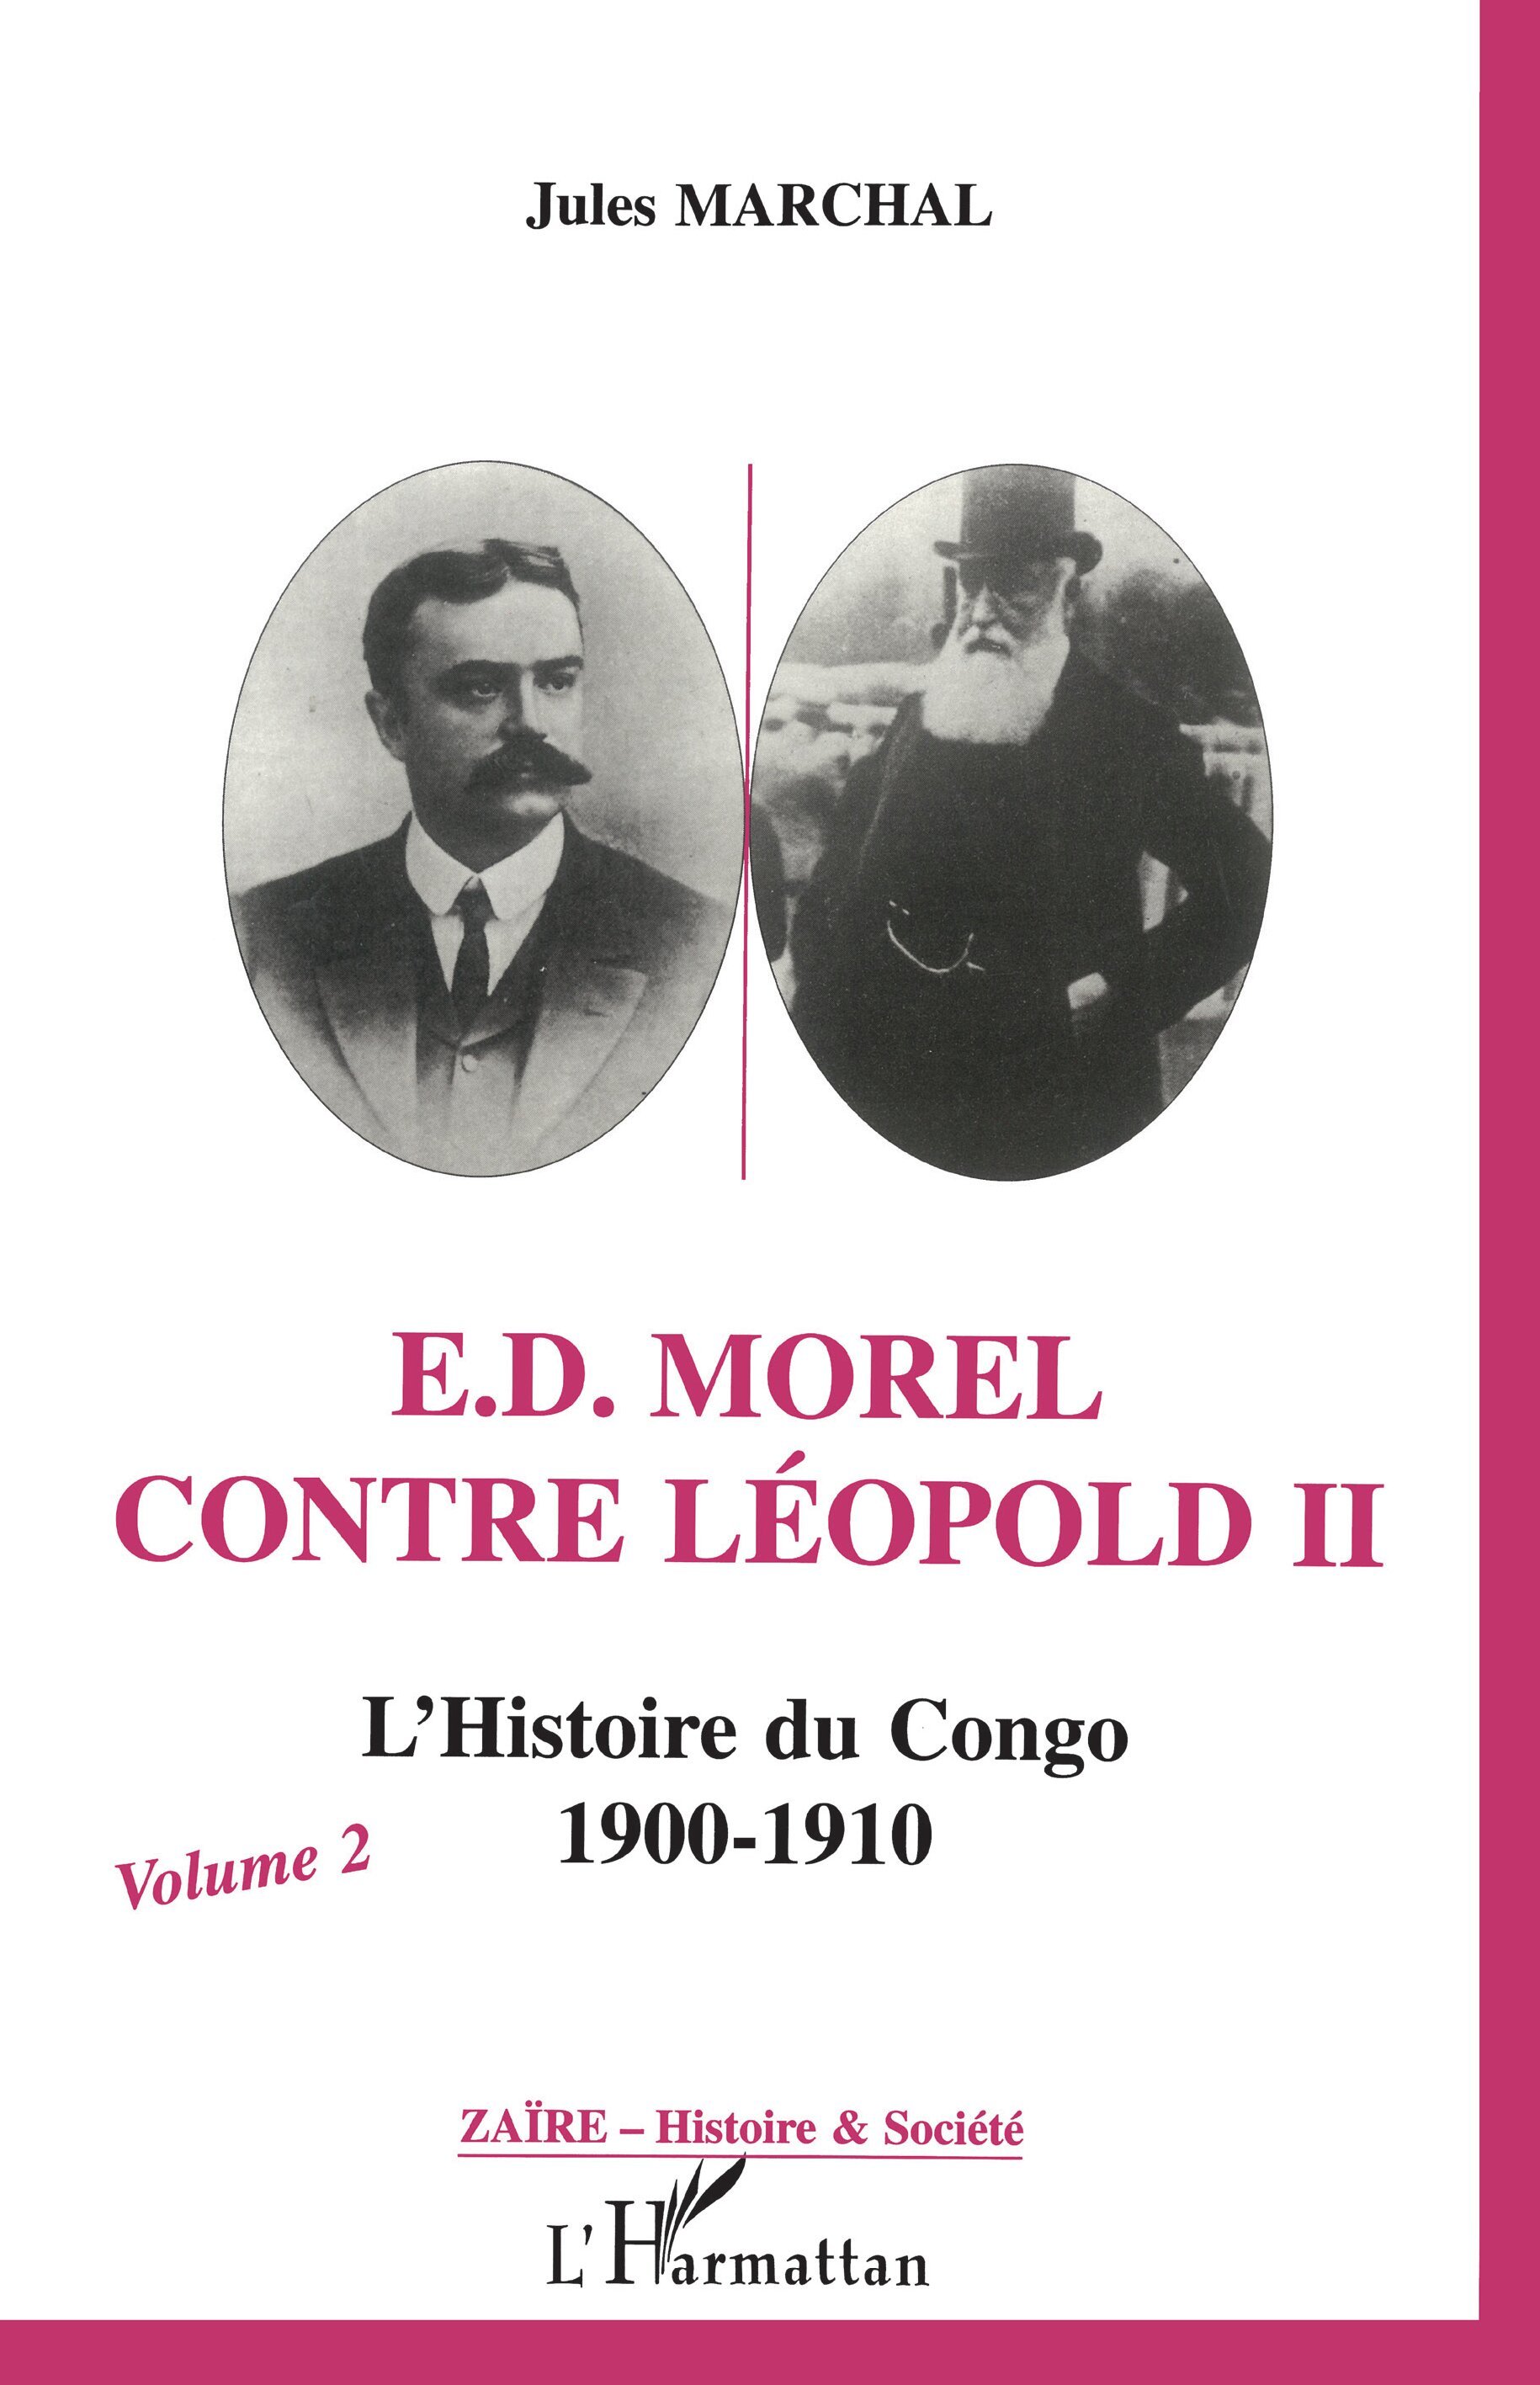 E. D. Morel contre Léopold II, L'histoire du Congo 1900-1910 - (Volume 2) (9782738428561-front-cover)